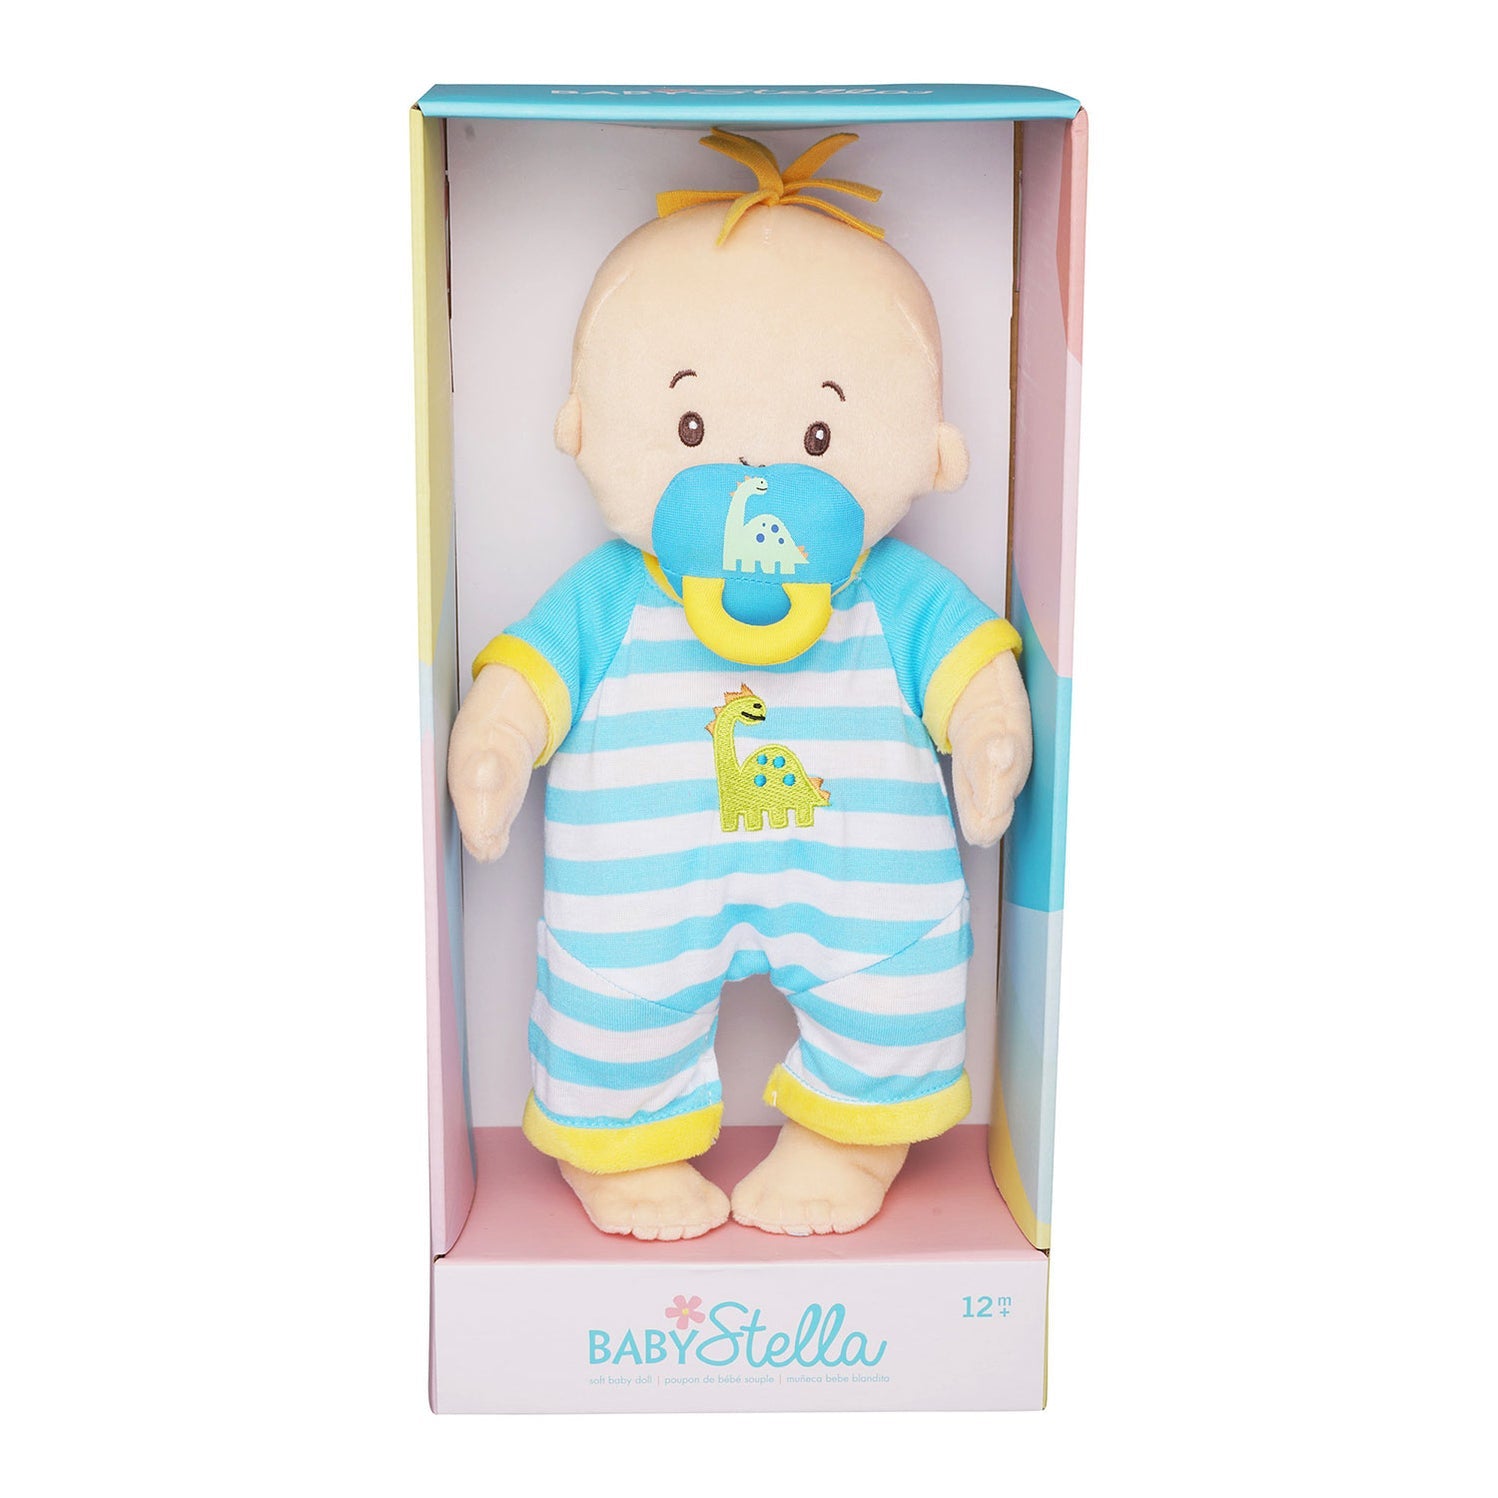 Baby Stella Peach Fella Soft Plush Baby Doll with Yellow Hair